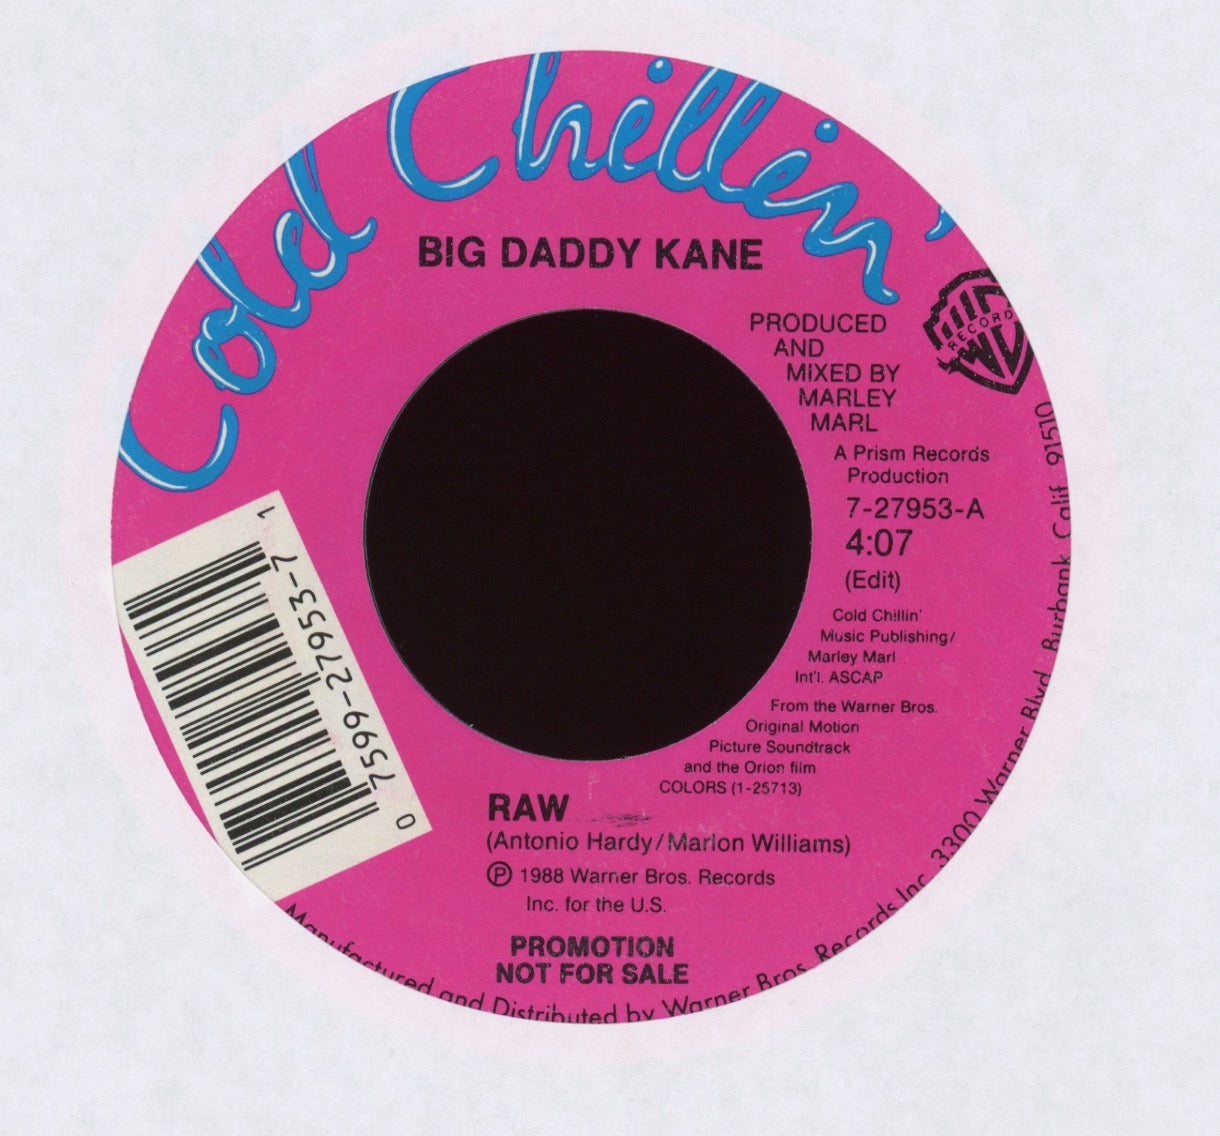 Big Daddy Kane - Raw on Cold Chillin' Promo